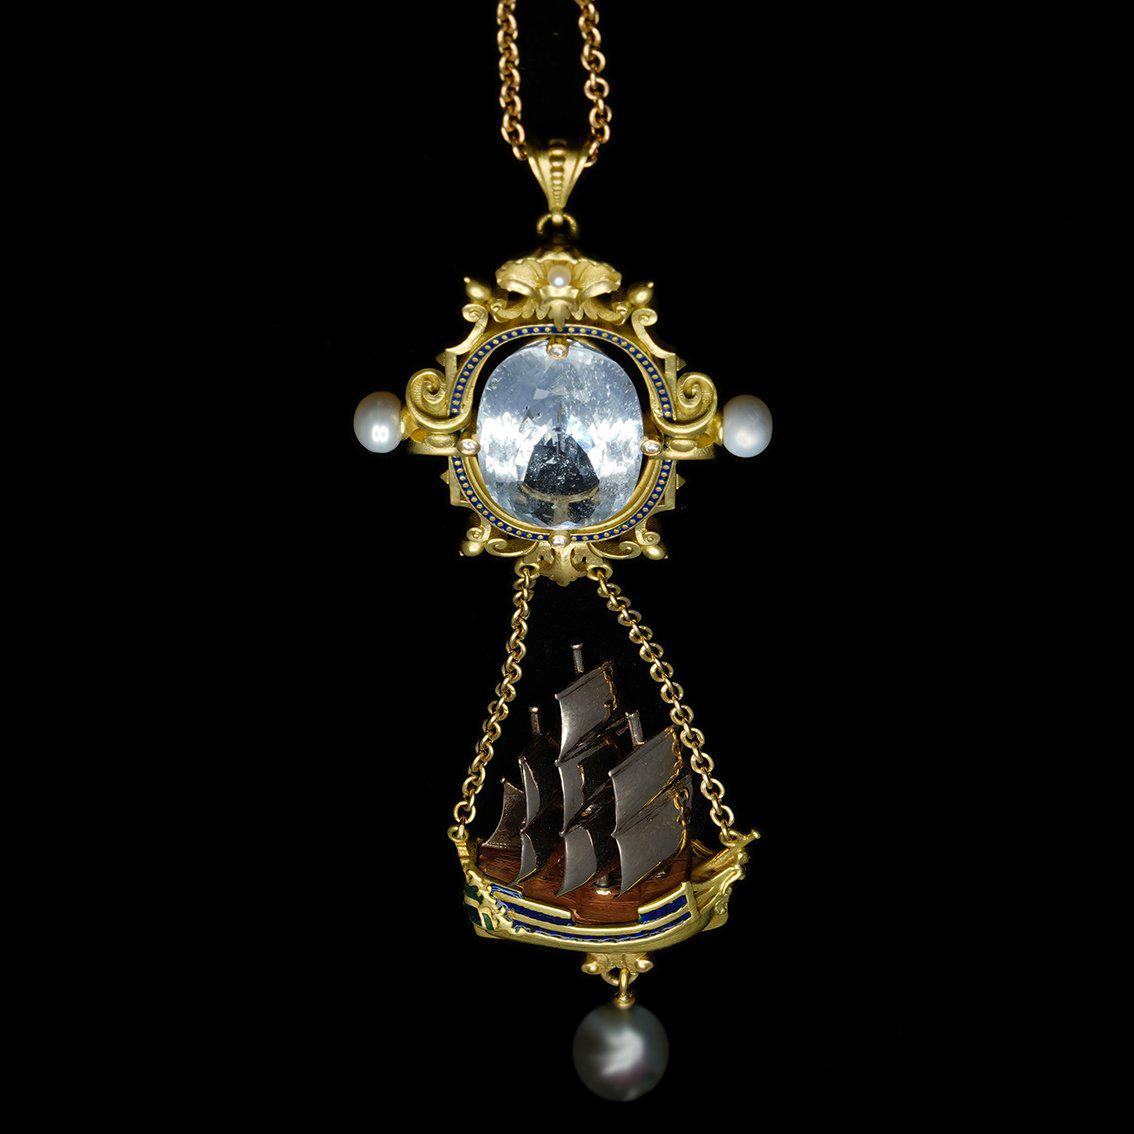 Aquamarine, Diamonds, Pearls, Enamel, 18kt Gold Antique Style Pendant Necklace For Sale 7